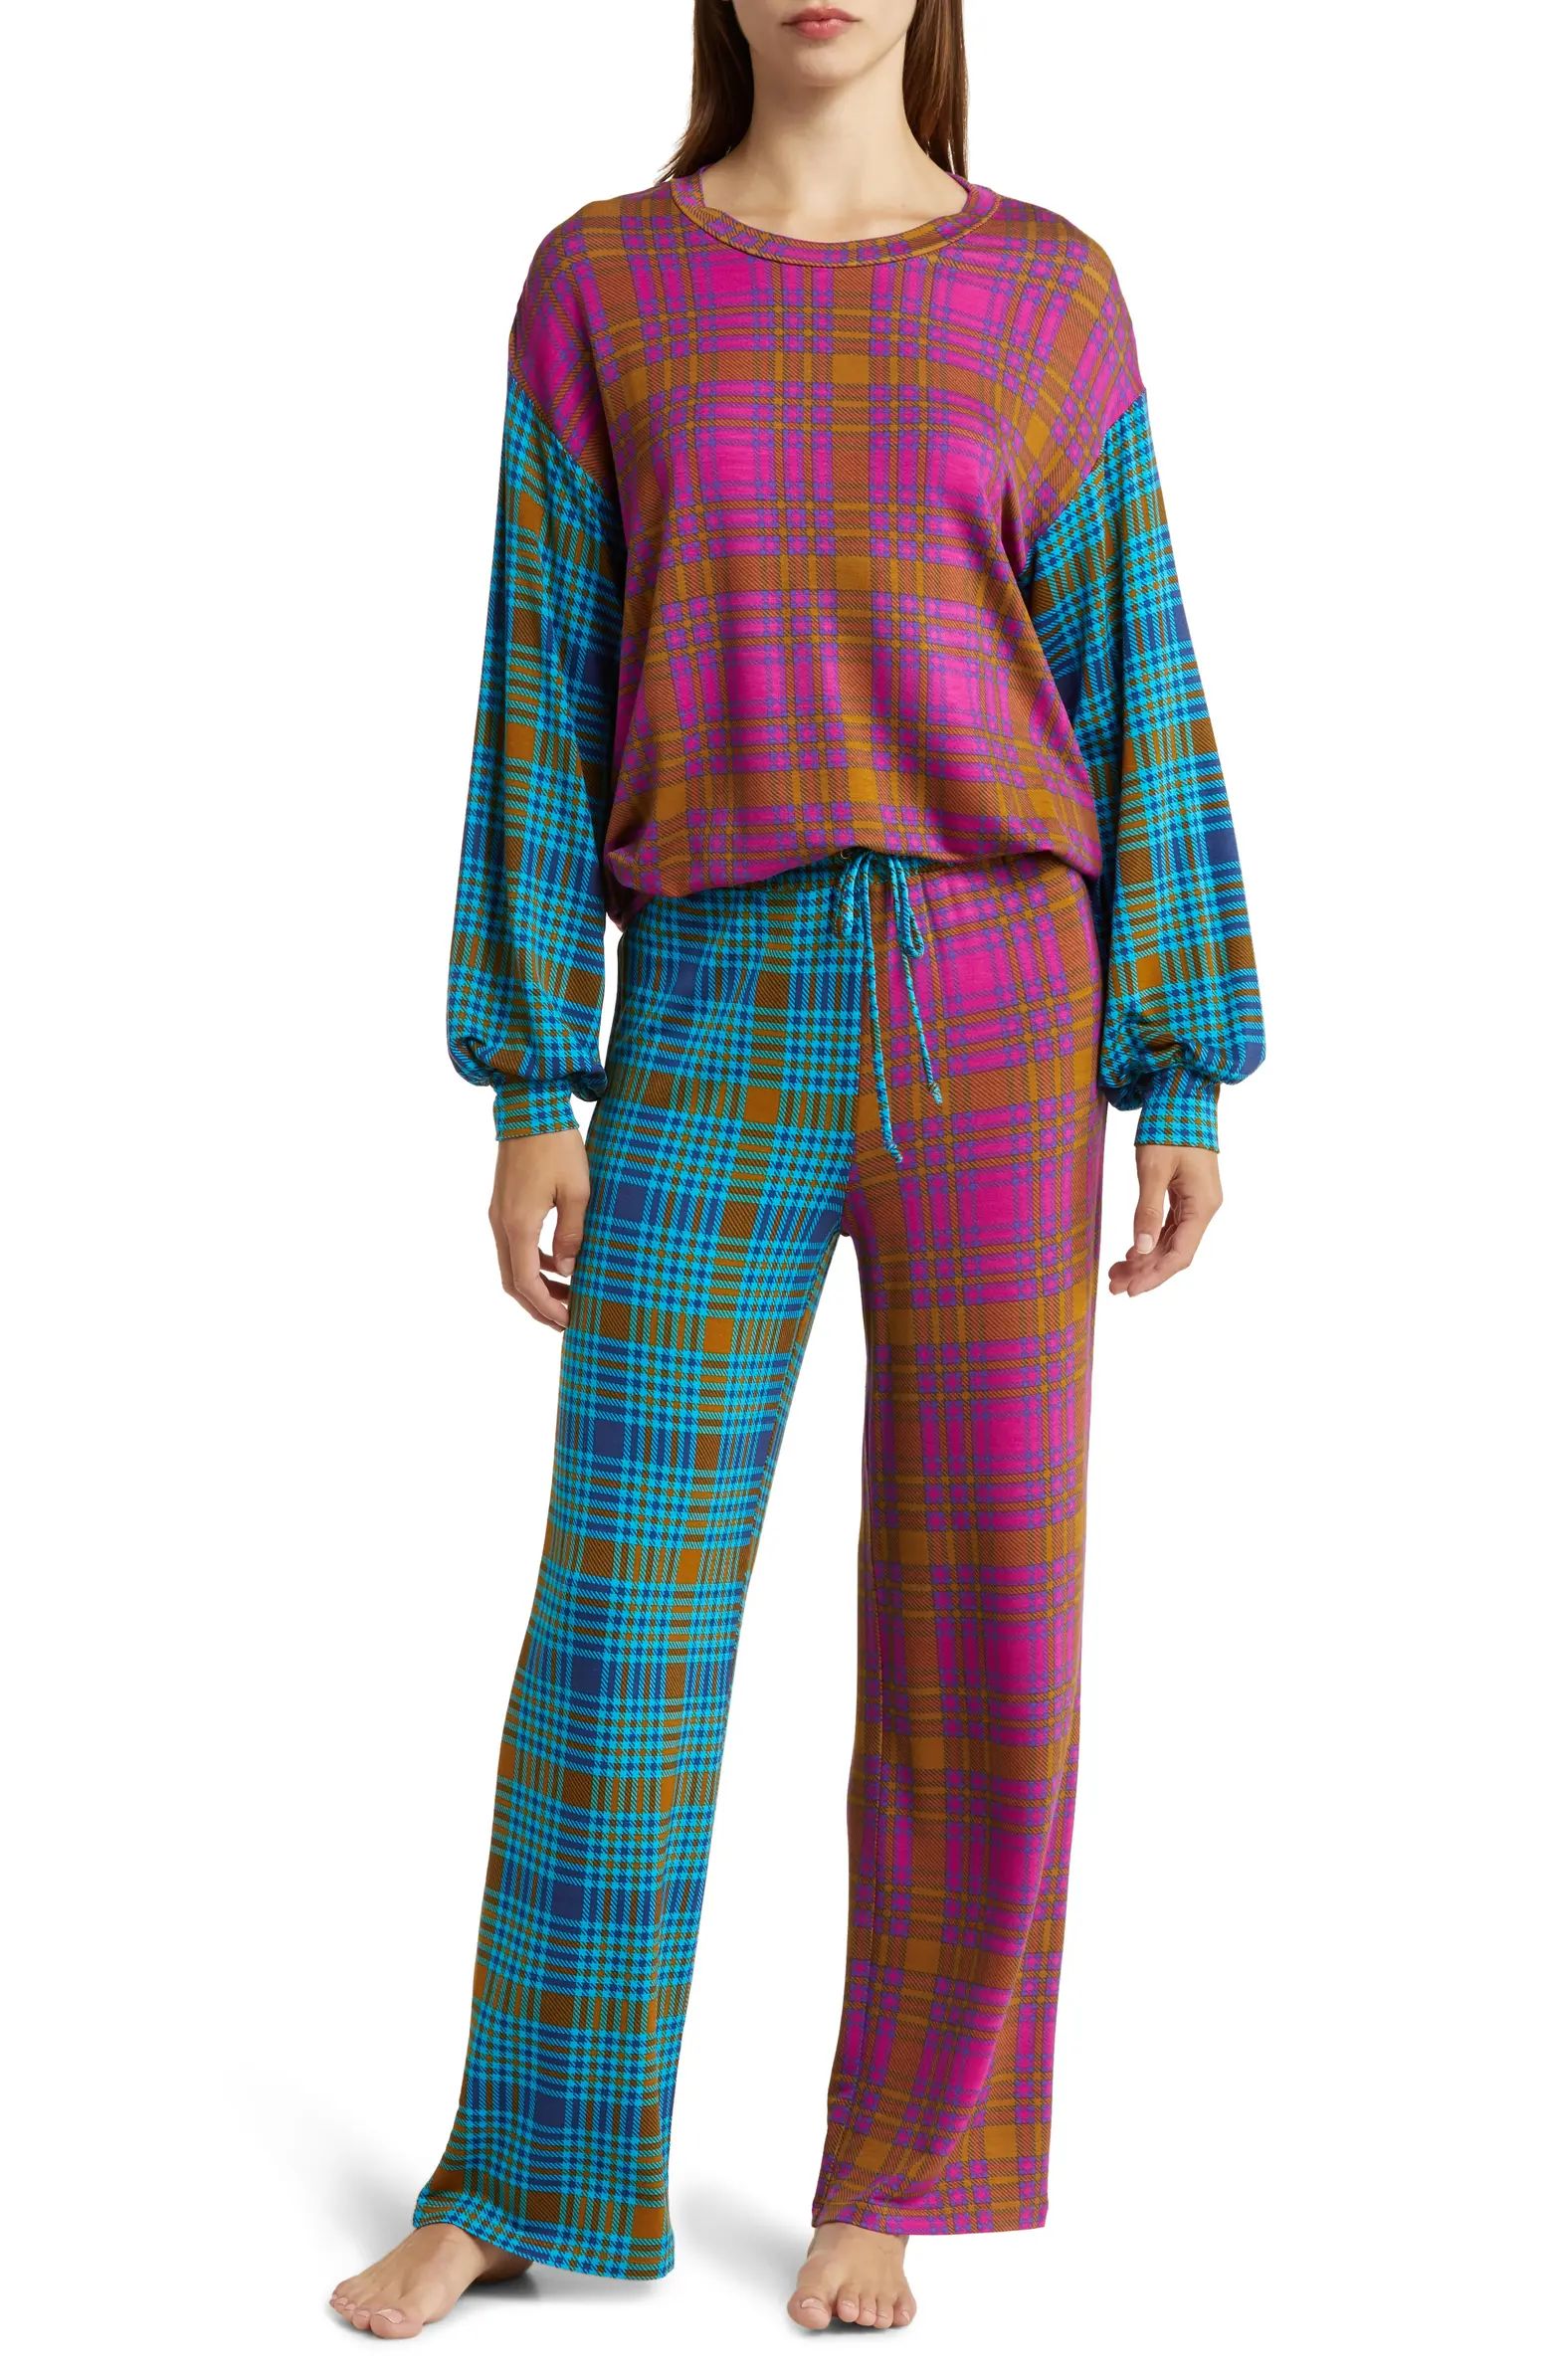 Play It Cool Pajamas | Nordstrom